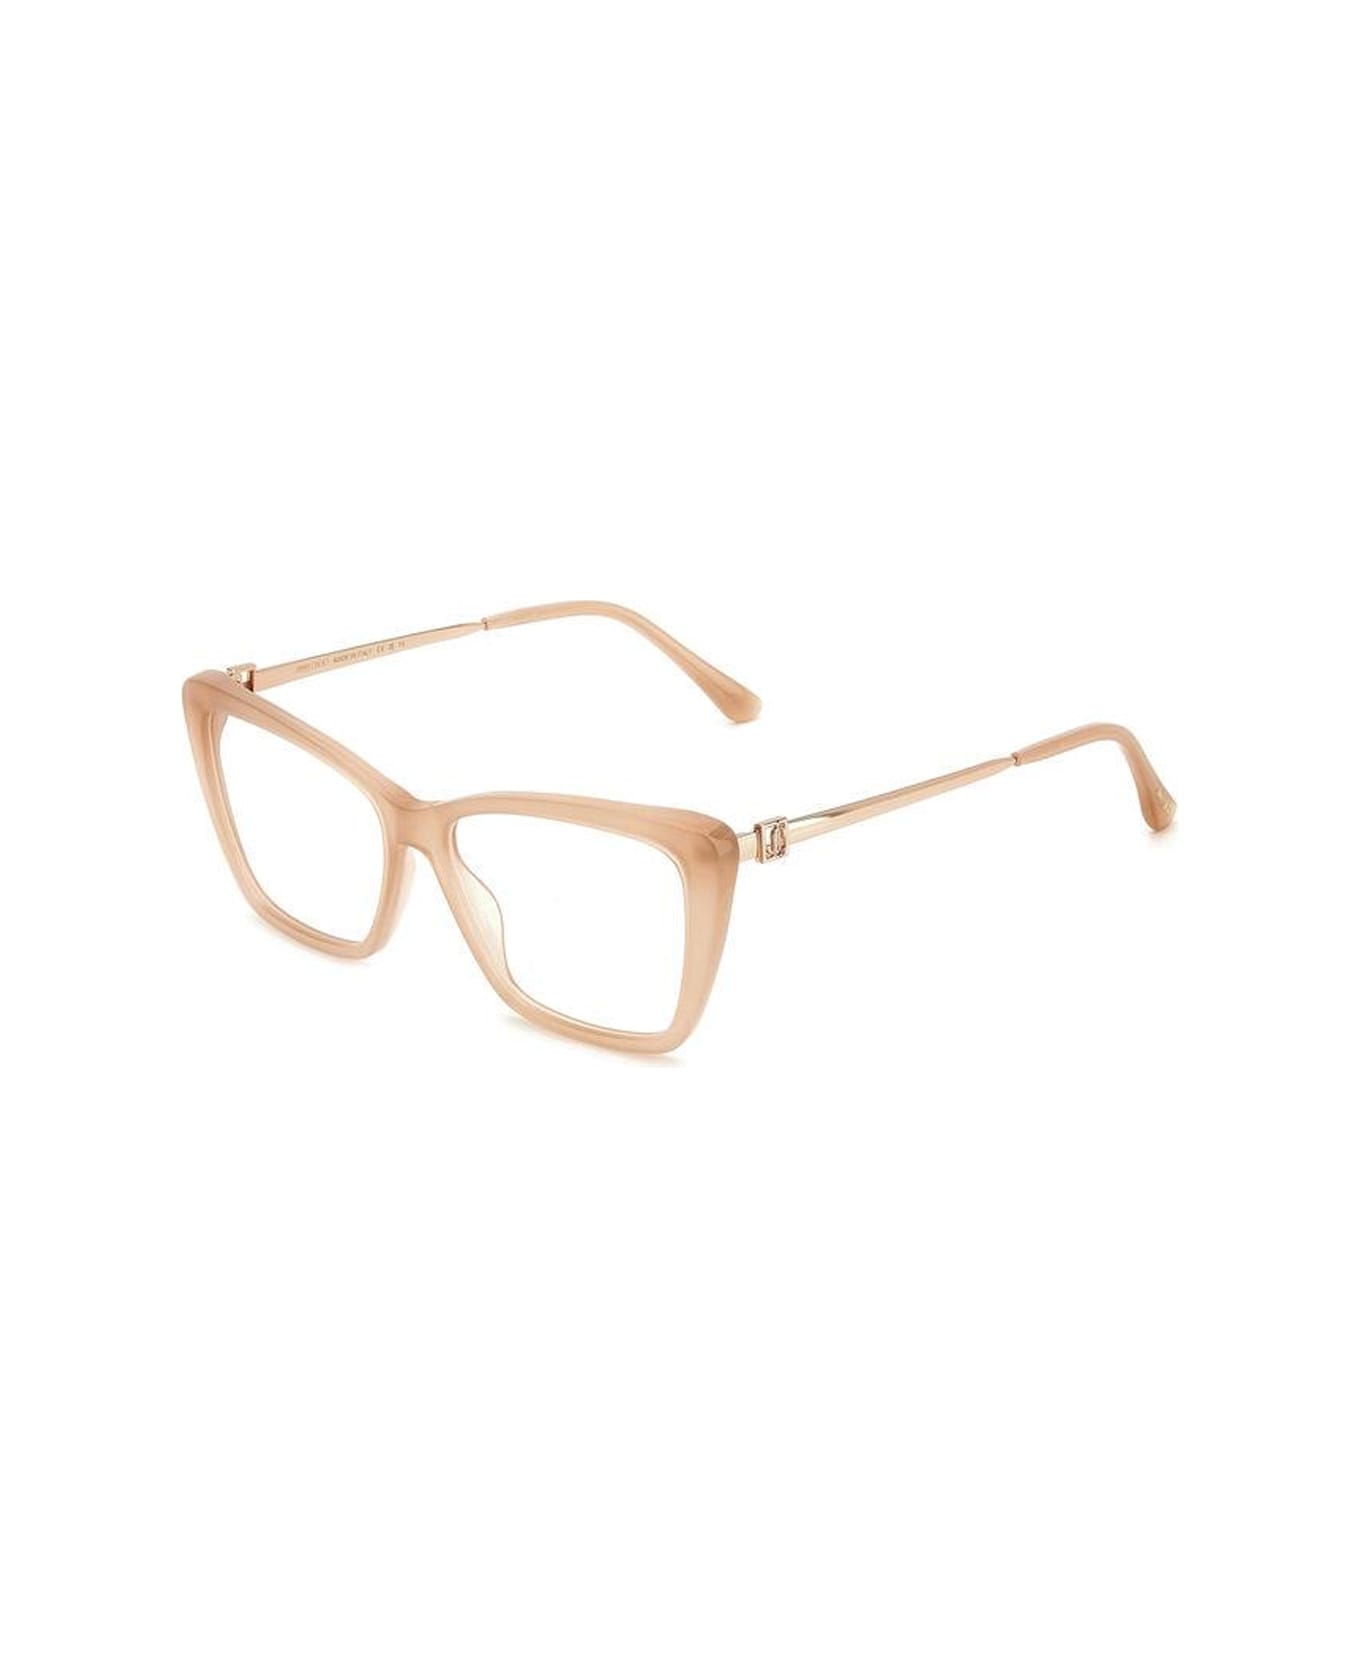 Jimmy Choo Eyewear Jc375 Fwm/15 Glasses - Rosa アイウェア